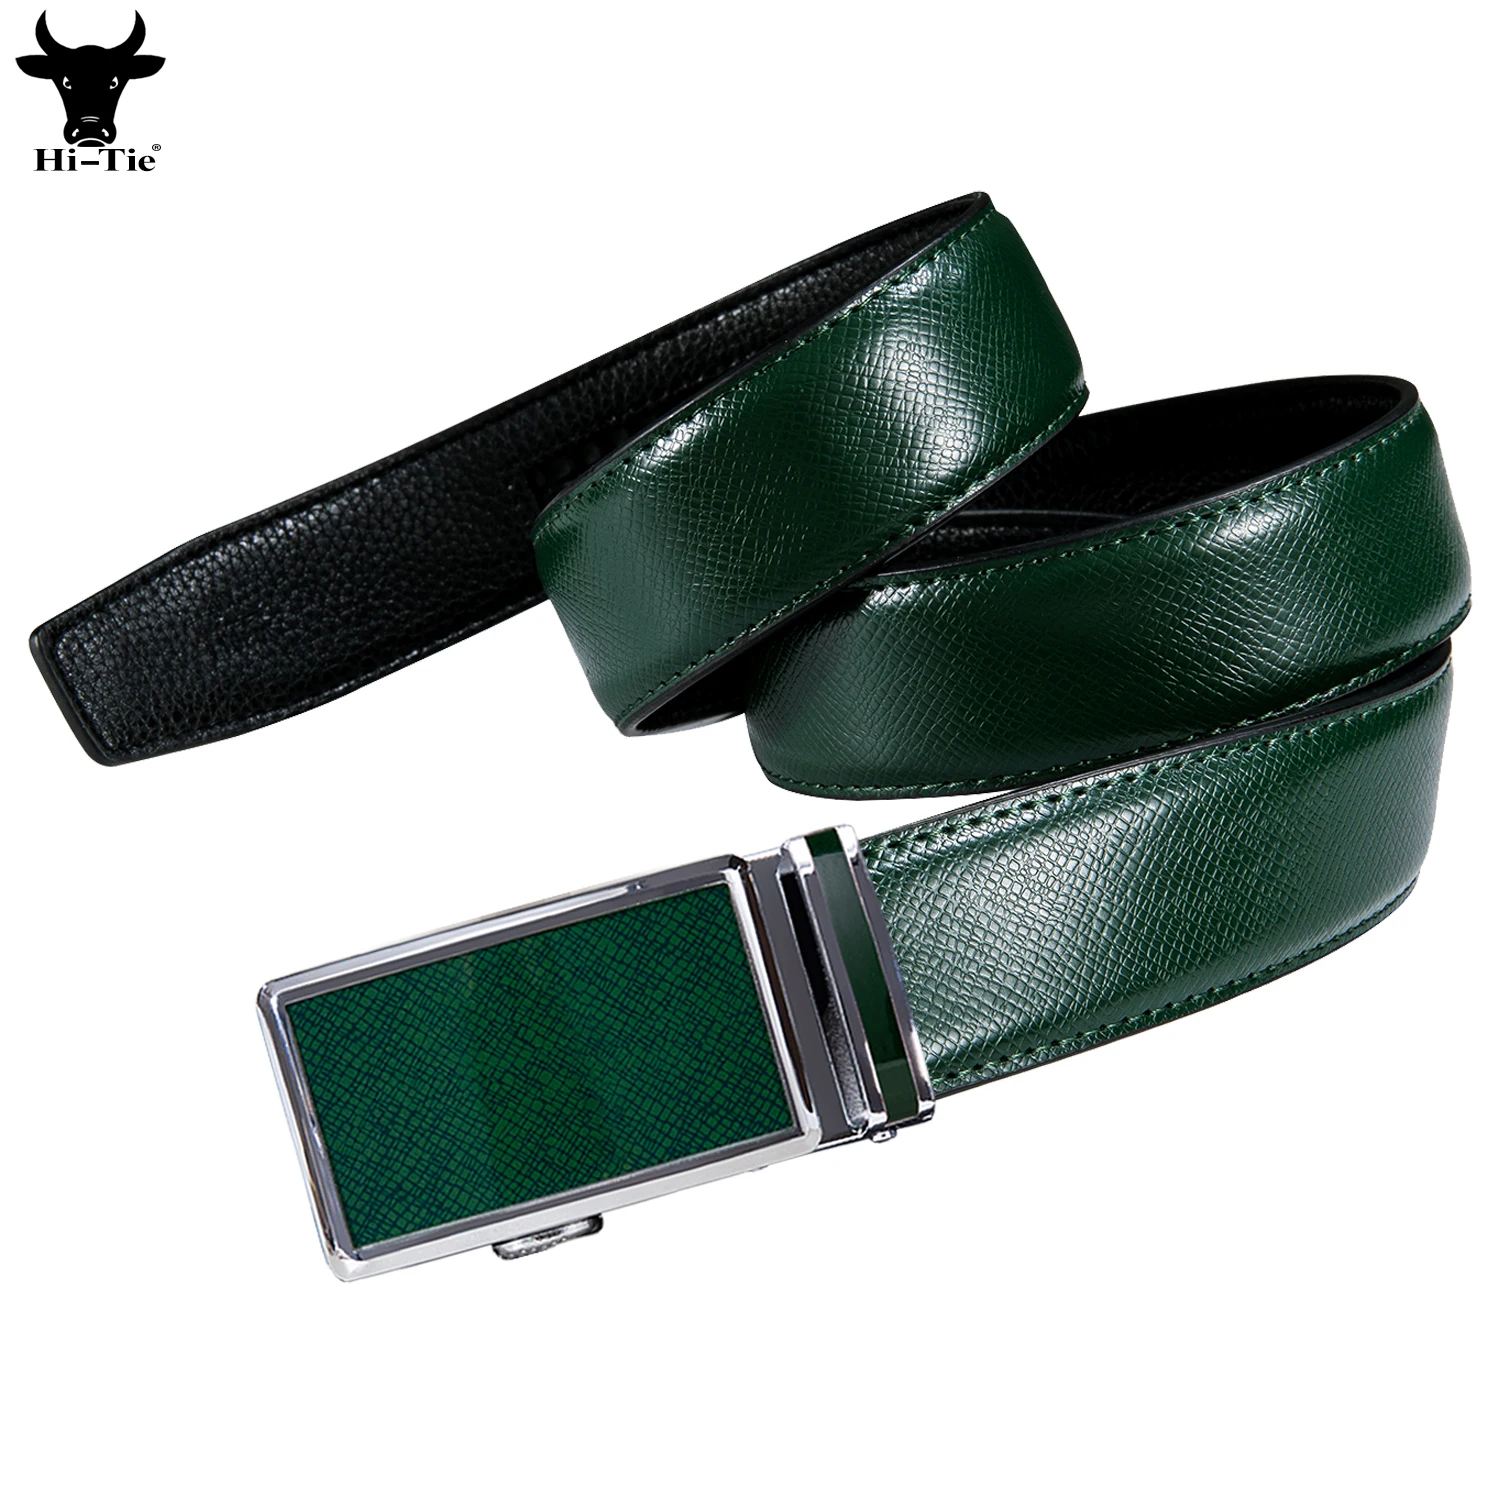 Hi-Tie Fashion Green Real Leather Mens Belts Automatic Buckles Ratchet Adult Waist Belt for Men Dress Jeans Suit Wedding Party